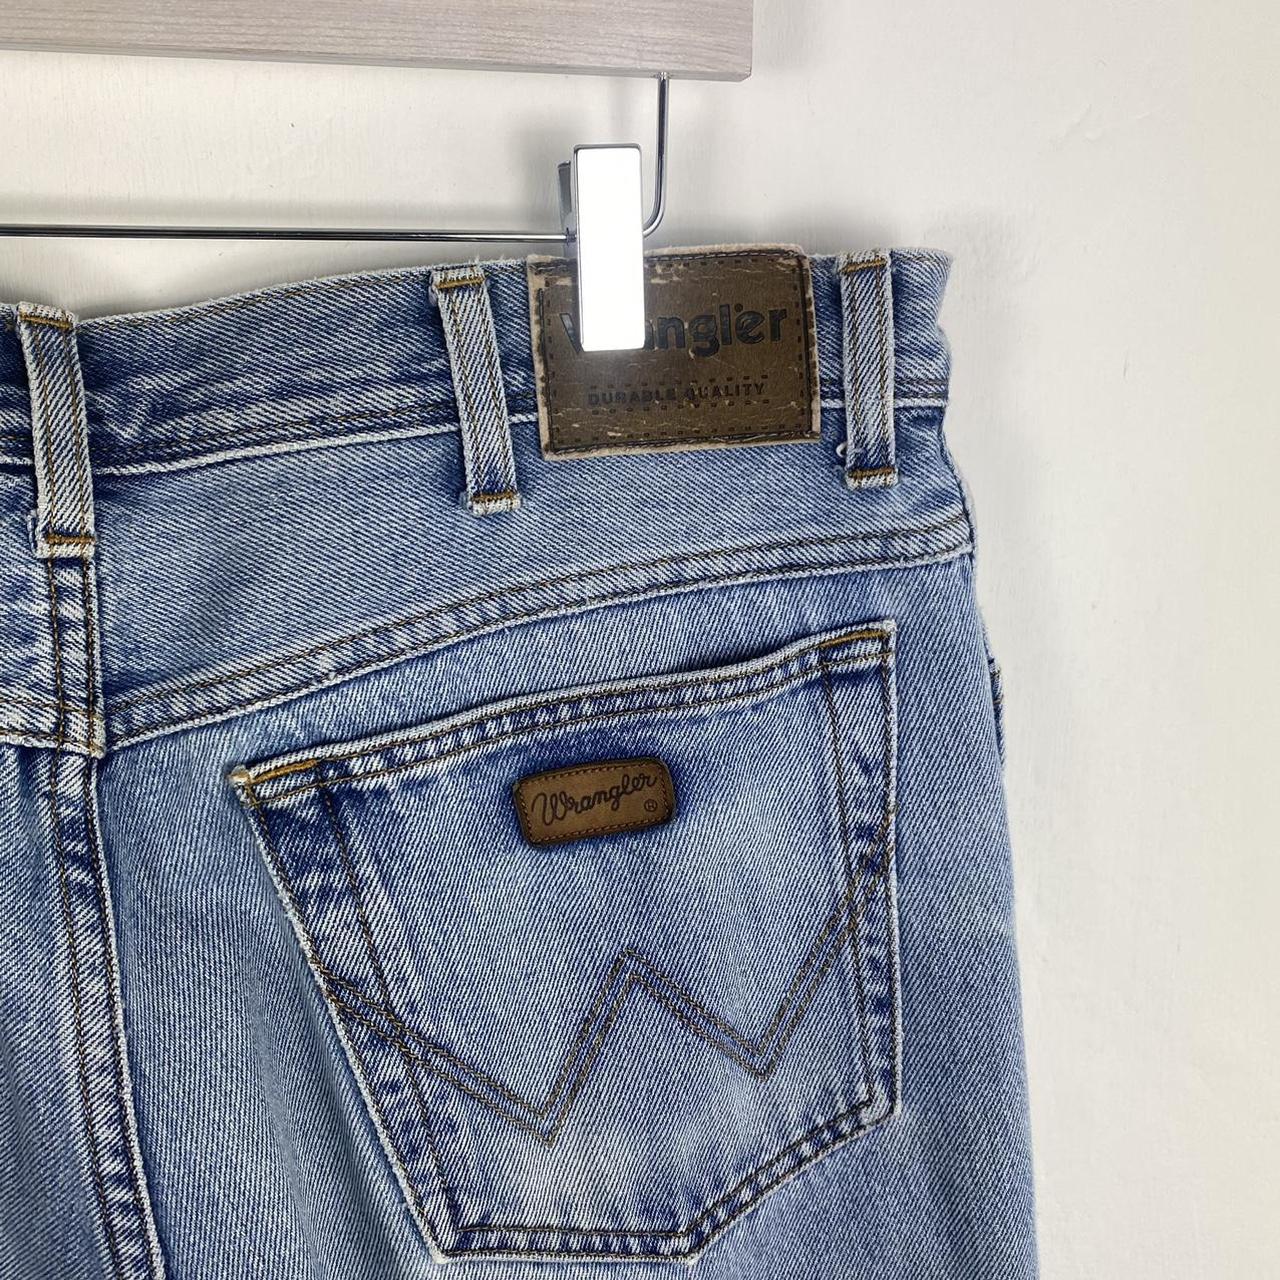 Wrangler jeans 38x32